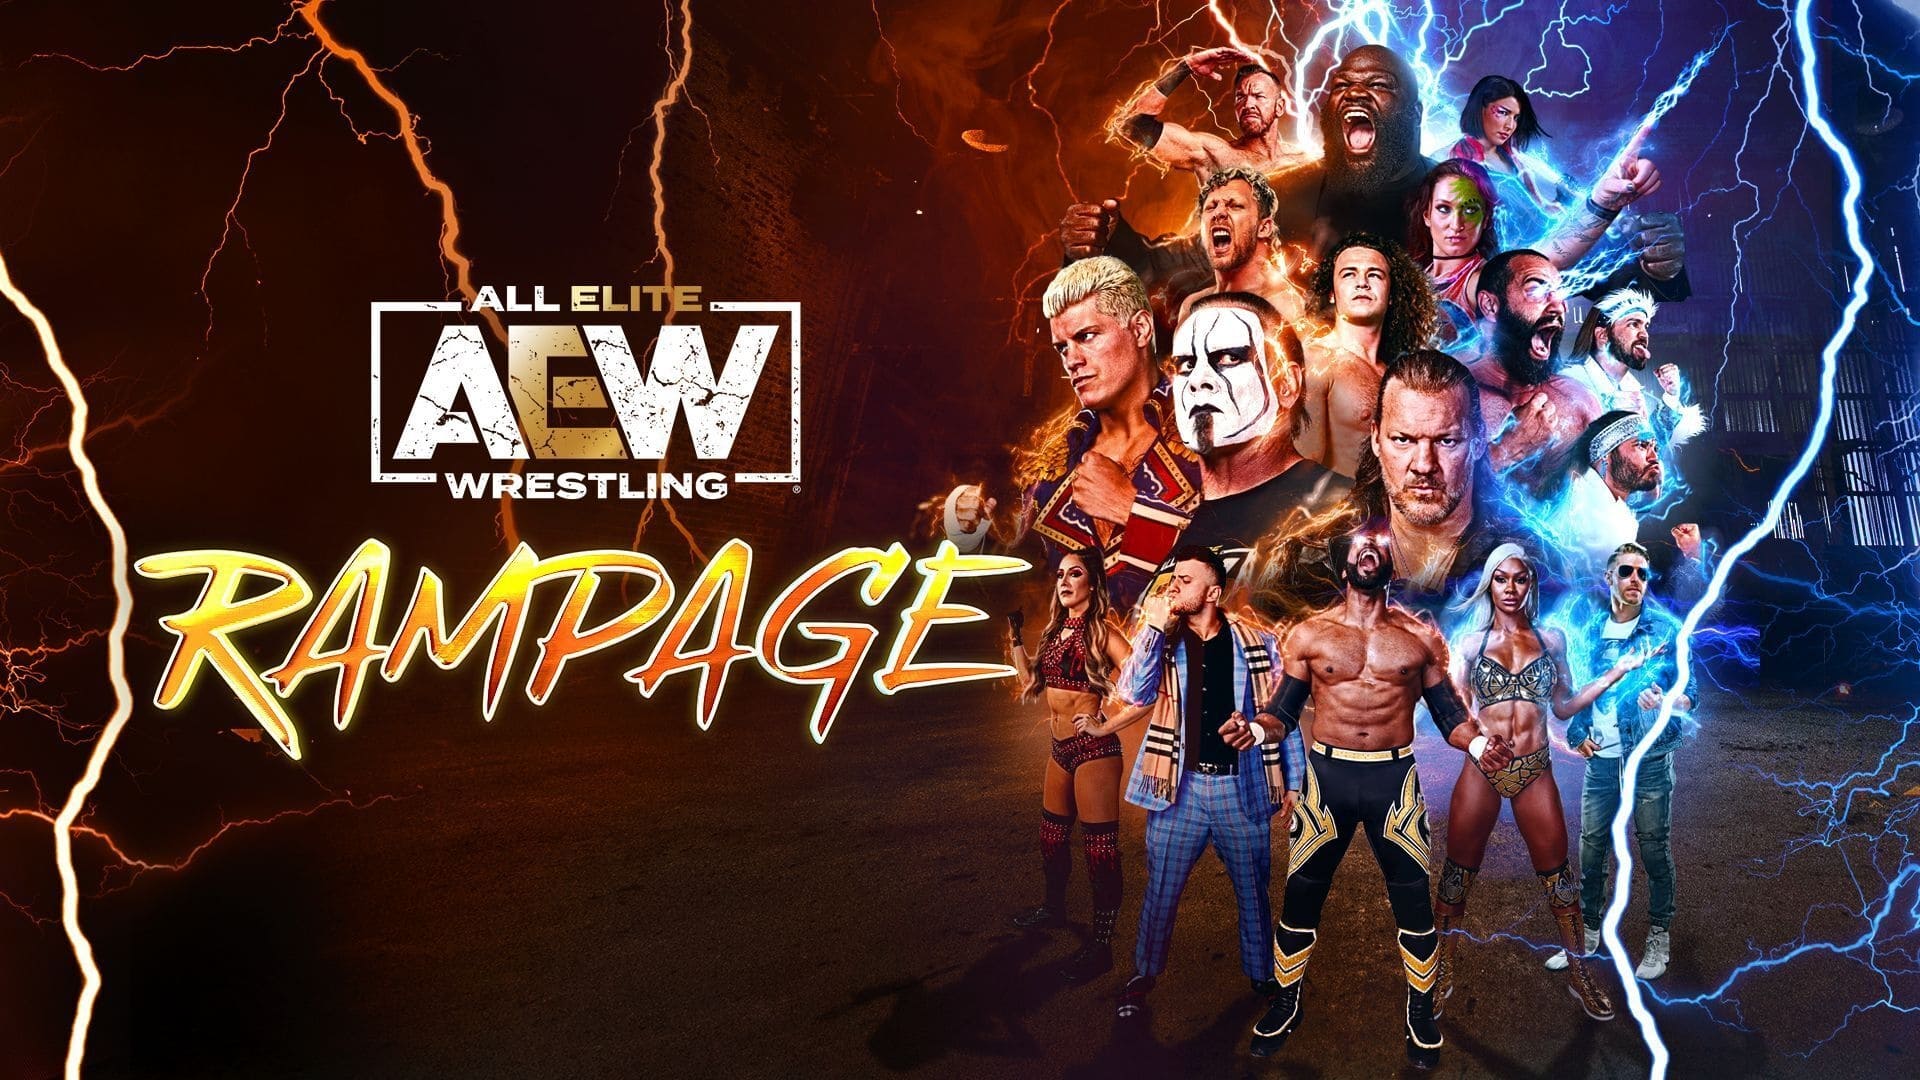 All Elite Wrestling: Rampage Gallery Image